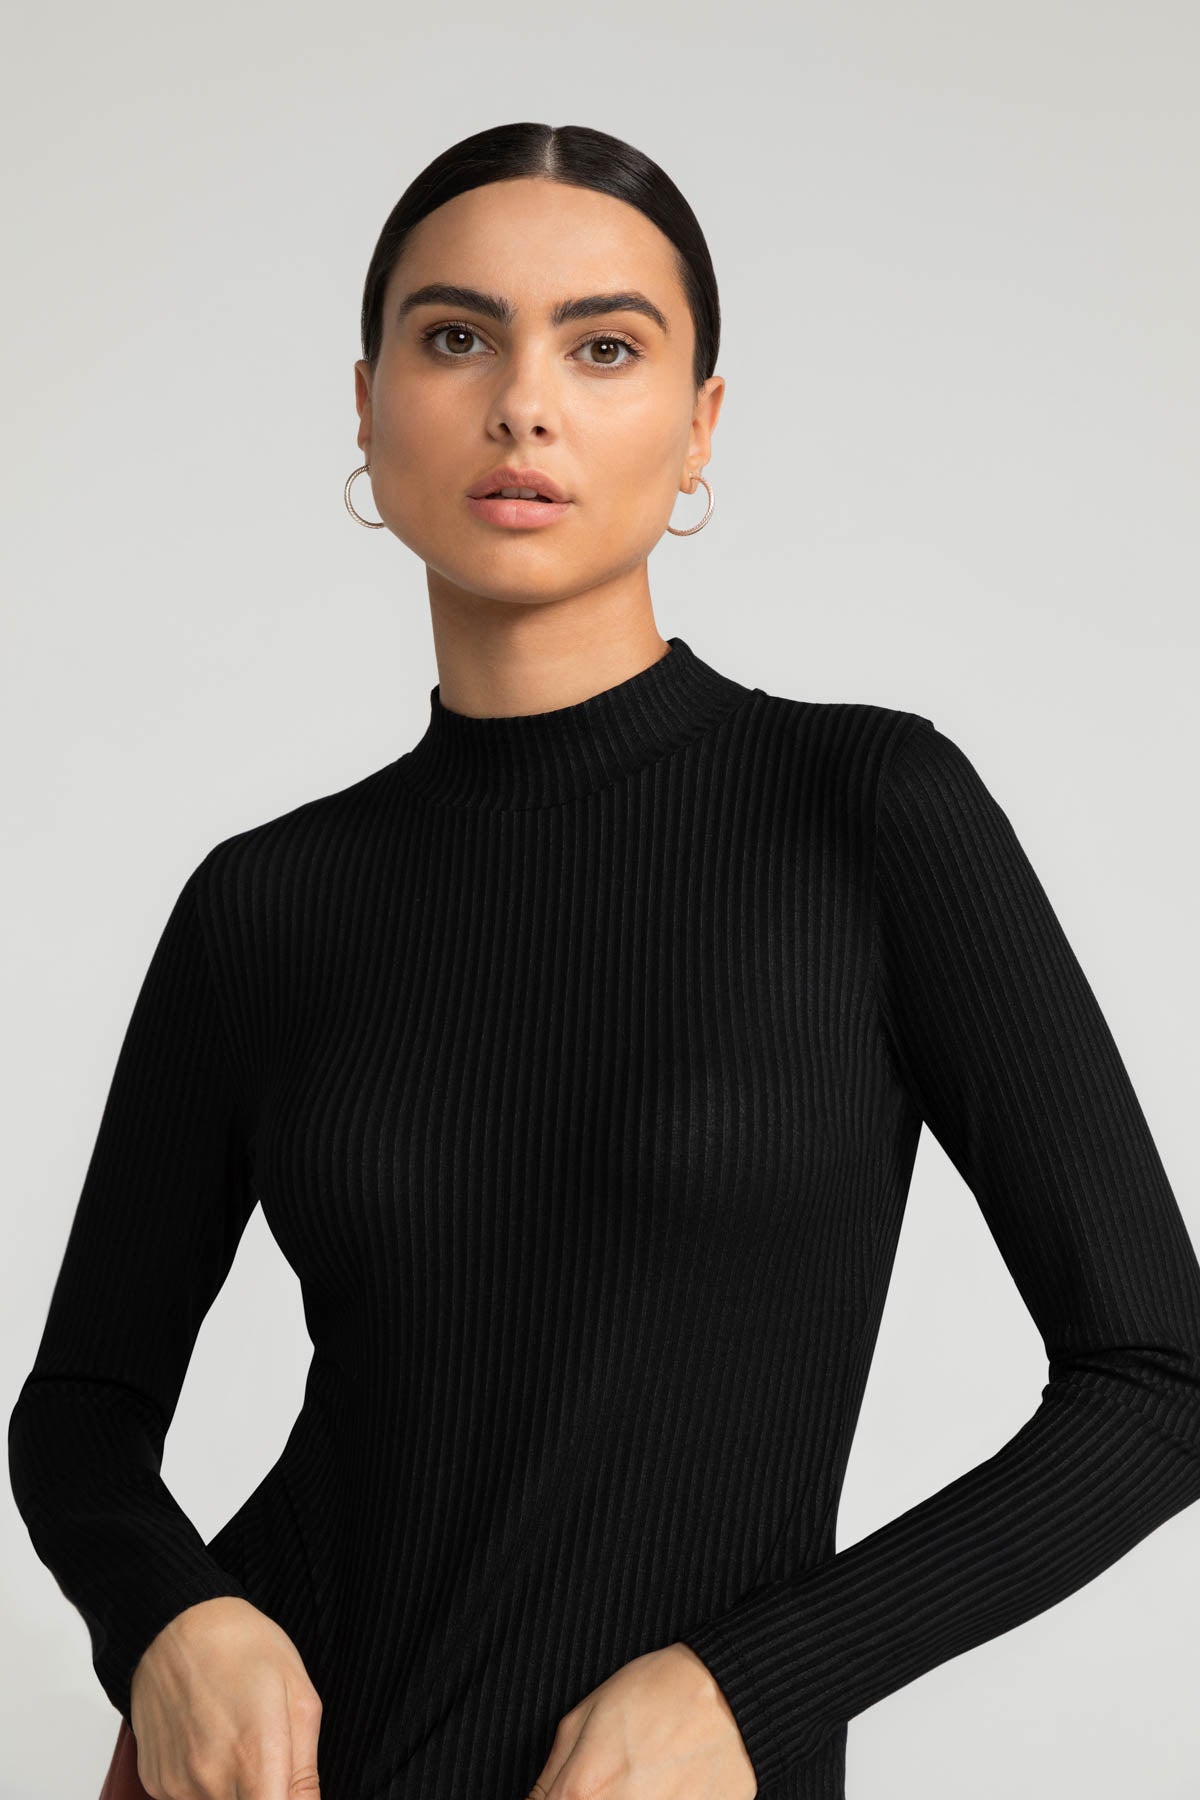 Long-sleeved shirt DIMAYA in black by LOVJOI made of TENCEL™